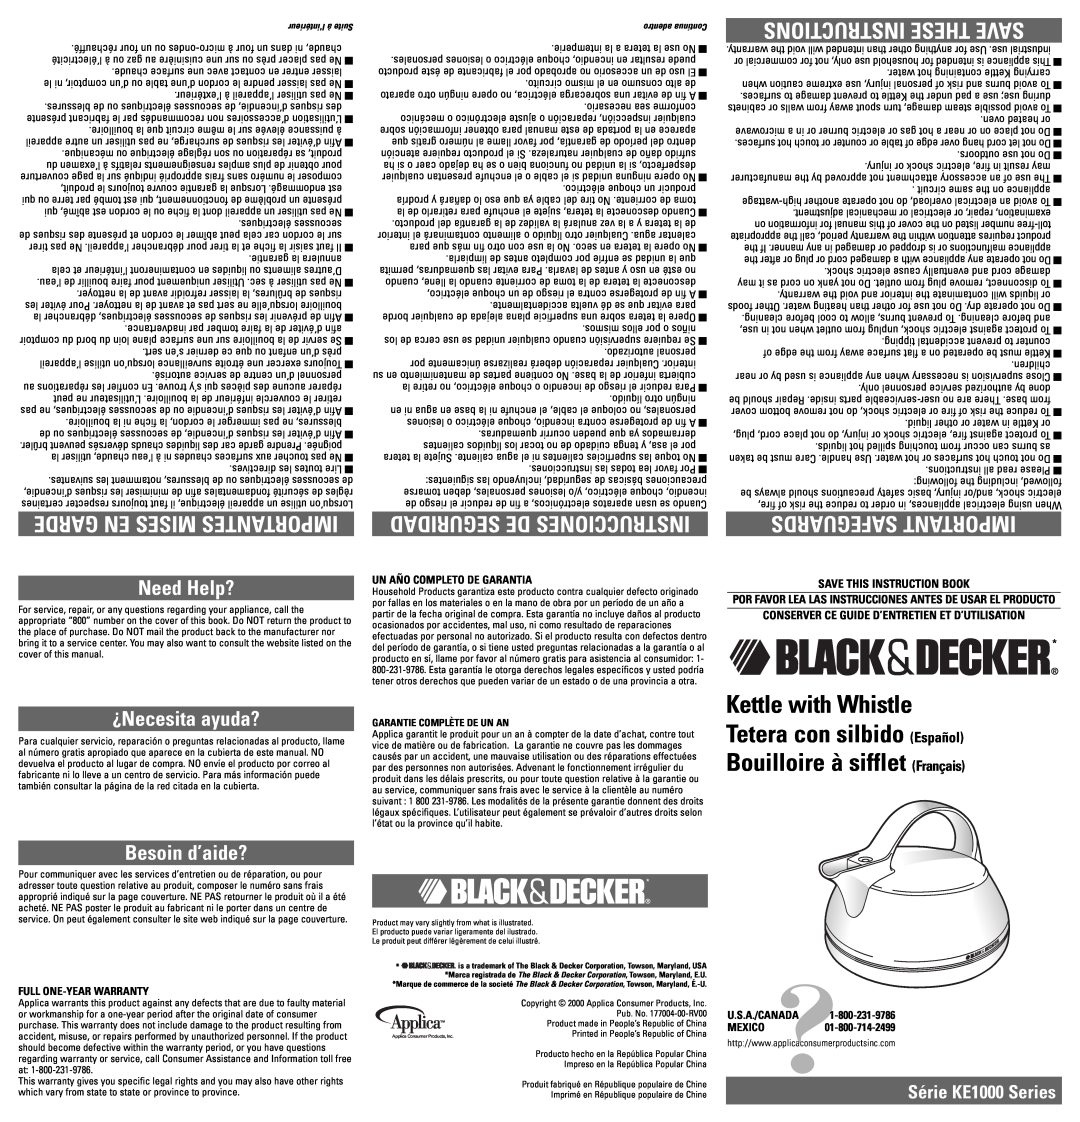 Black & Decker KE1000 user service Instructions These Save, Safeguards Important, GARDE EN MISES IMPORTANTES Need Help? 